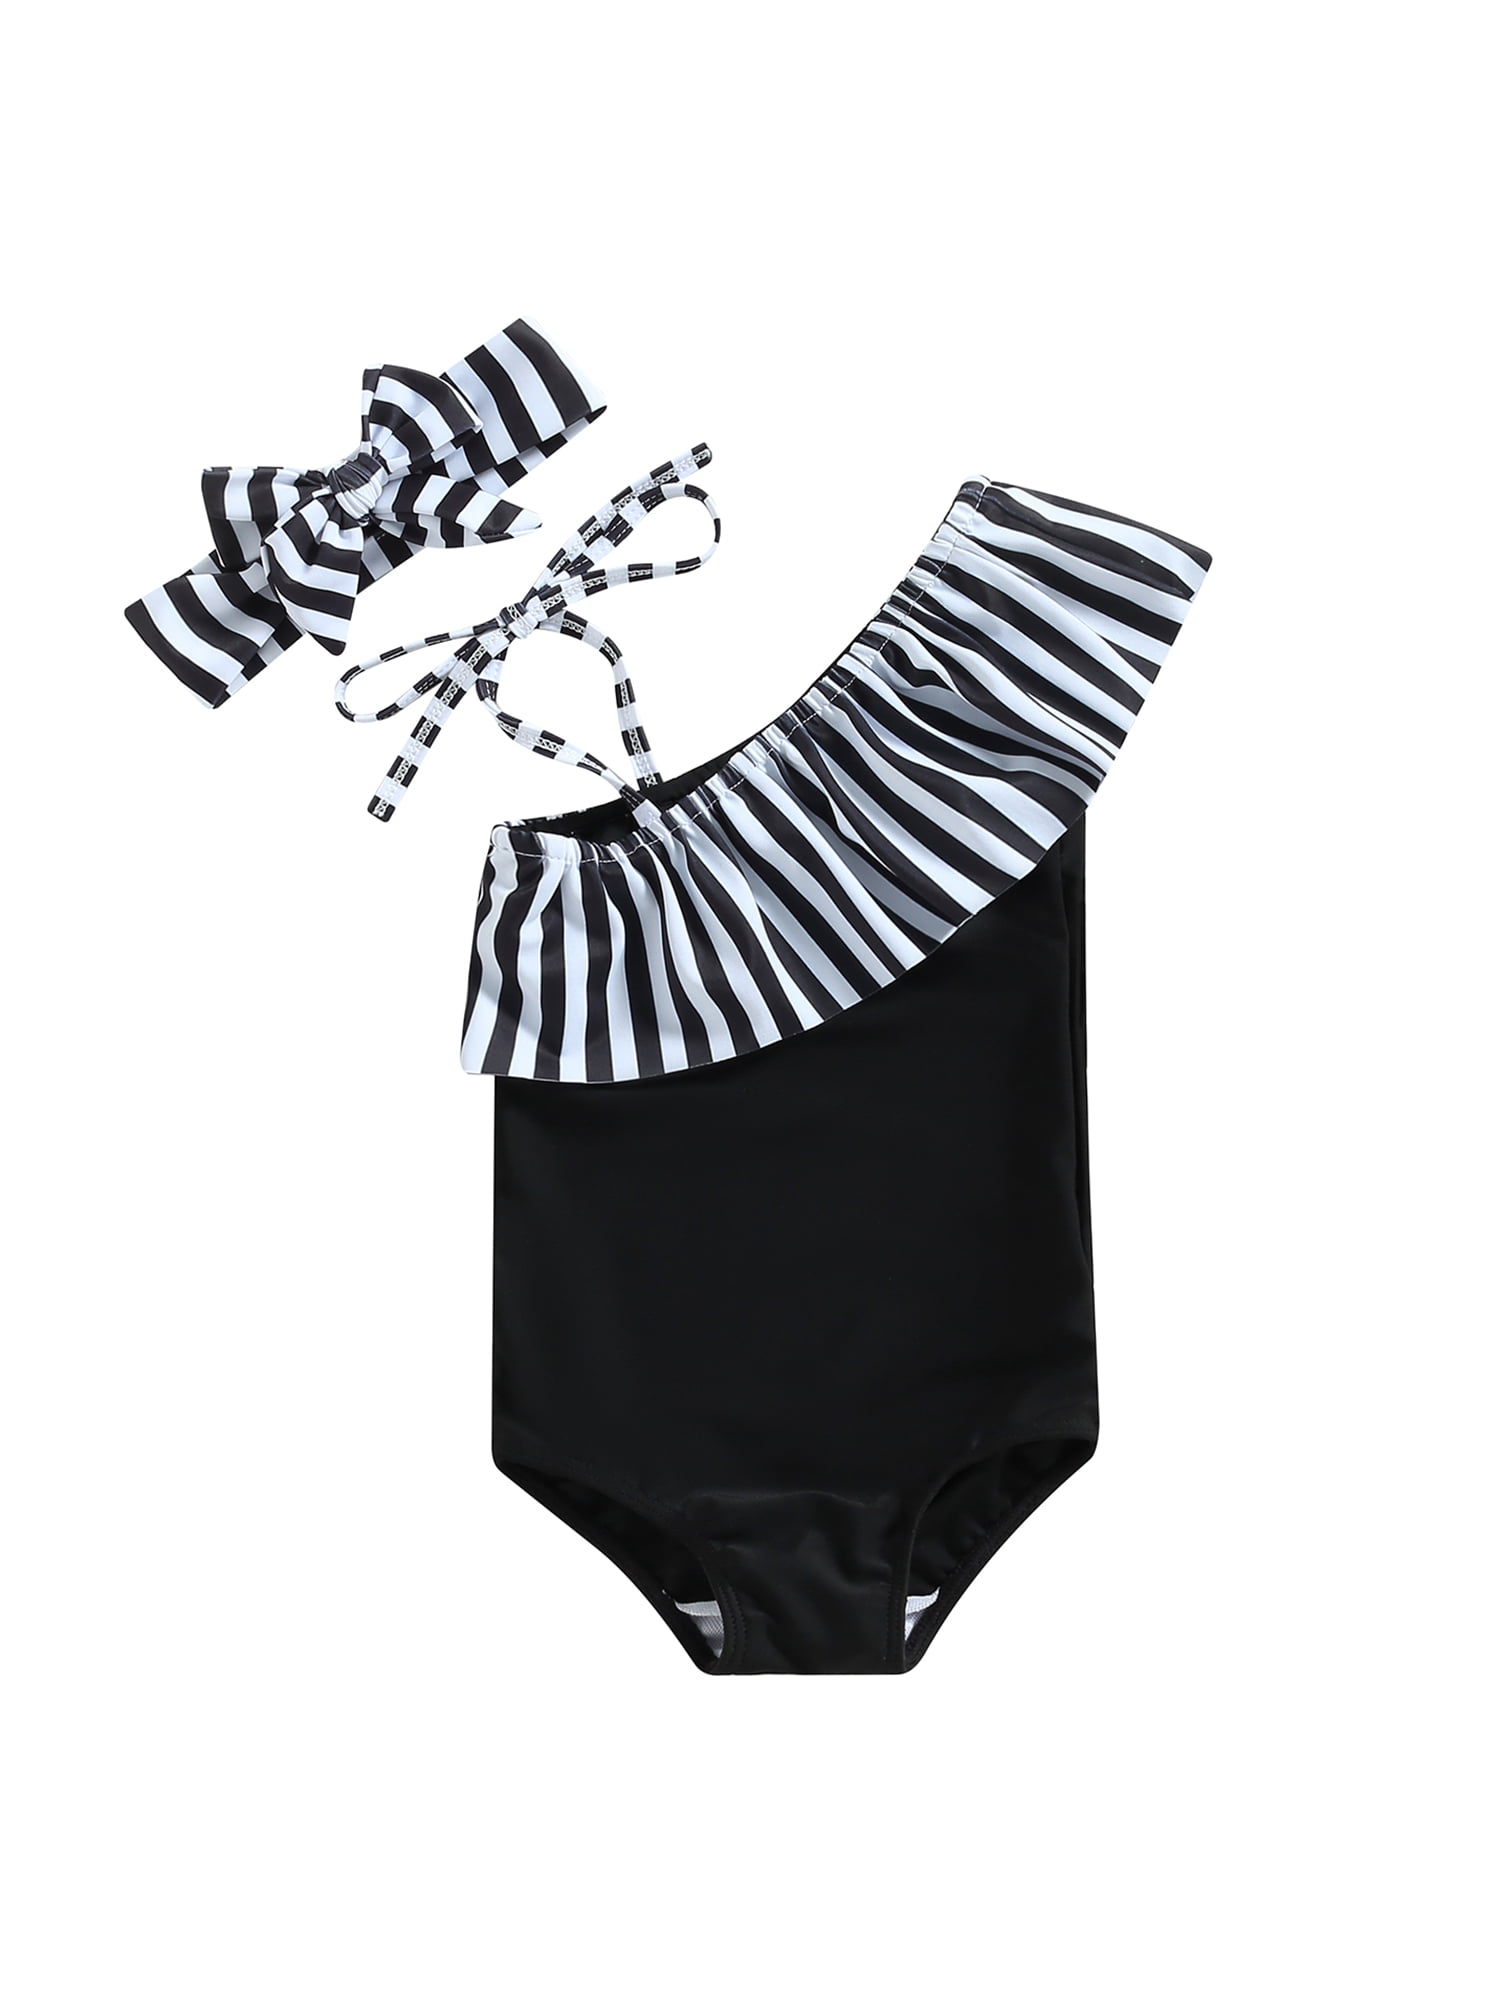 Toddler Baby Girl Swimsuit One Piece Bikini One Shoulder Ruffle Swimwear Stripe Bathing Suit Headband Beach Outfits